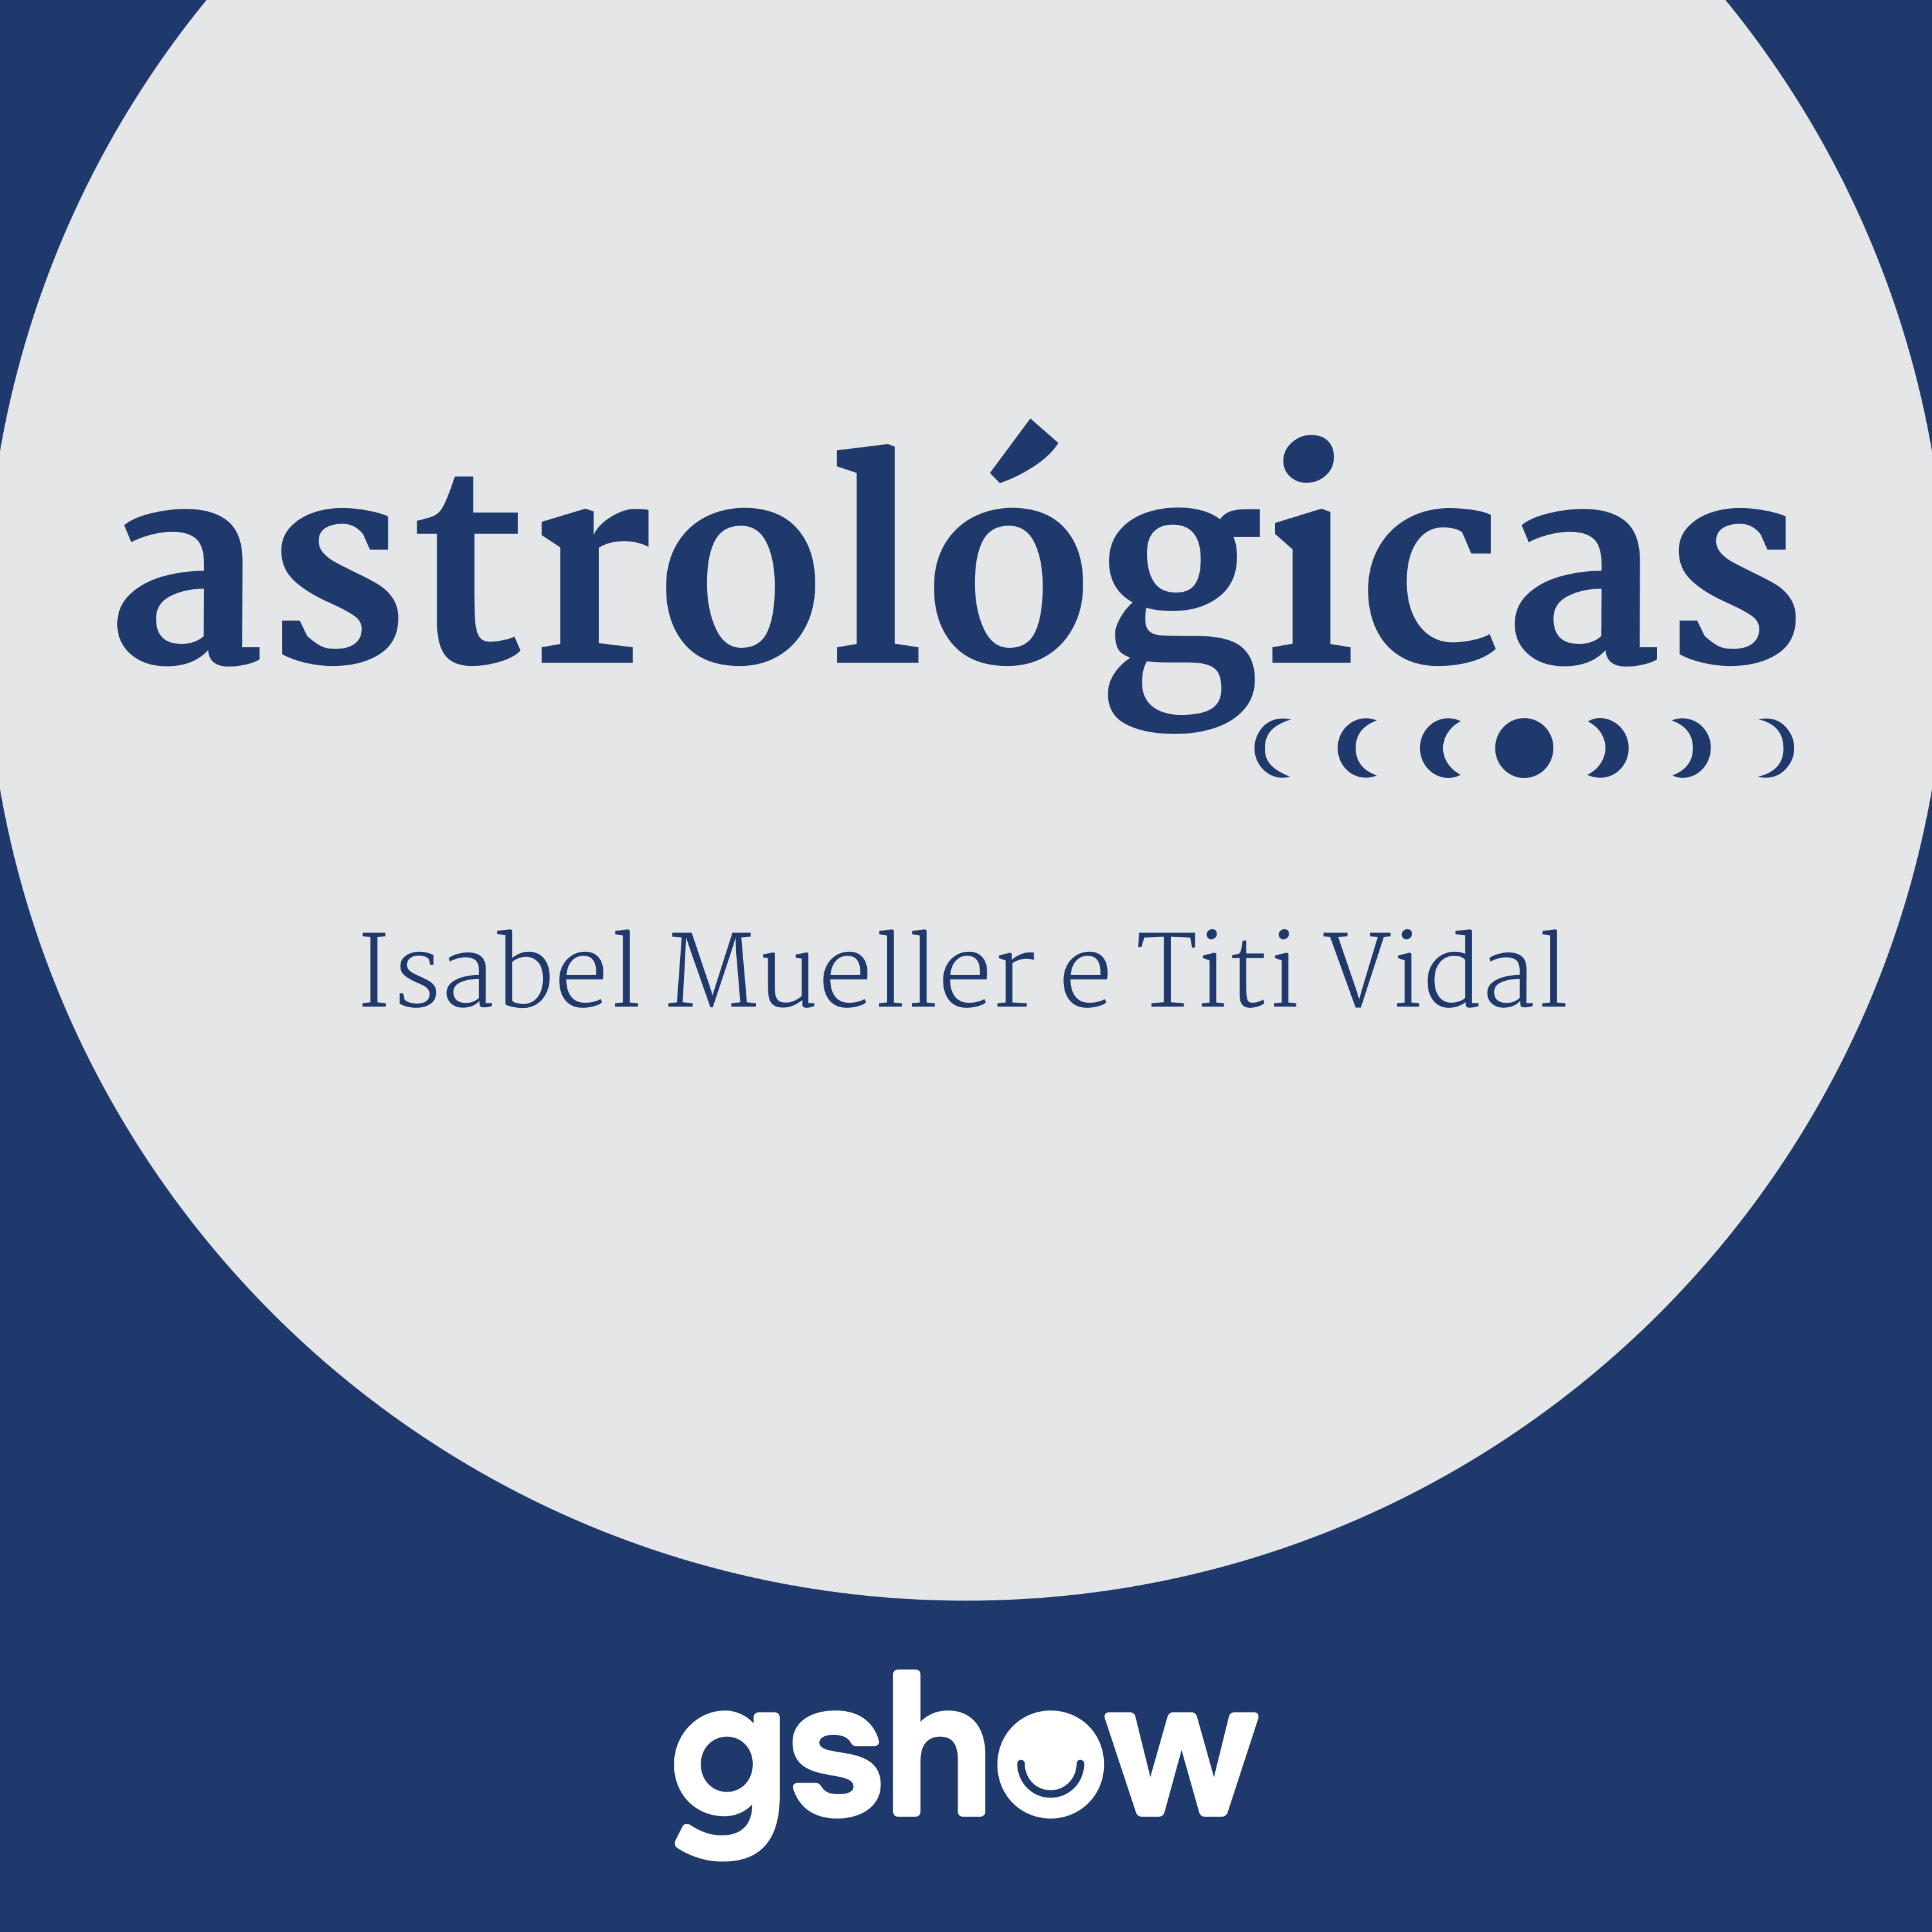 Astrologuês - Má conduta na Astrologia com Yub Miranda